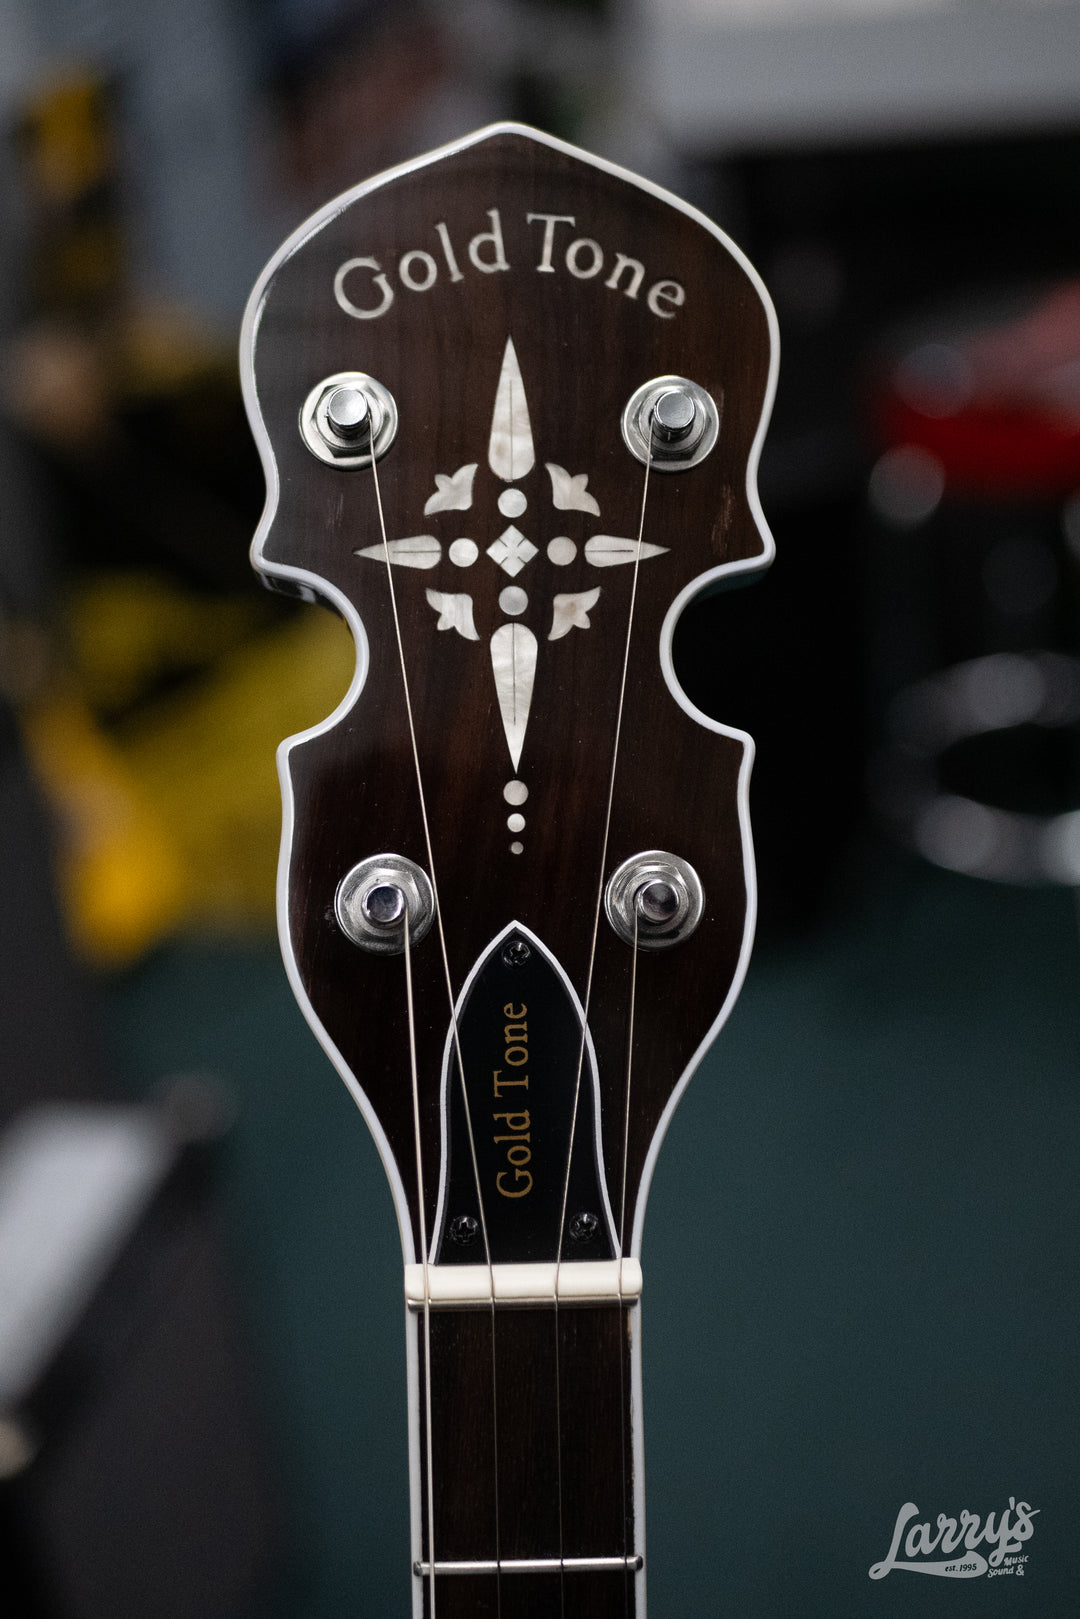 Gold Tone BG-150F Bluegrass Banjo with Flange